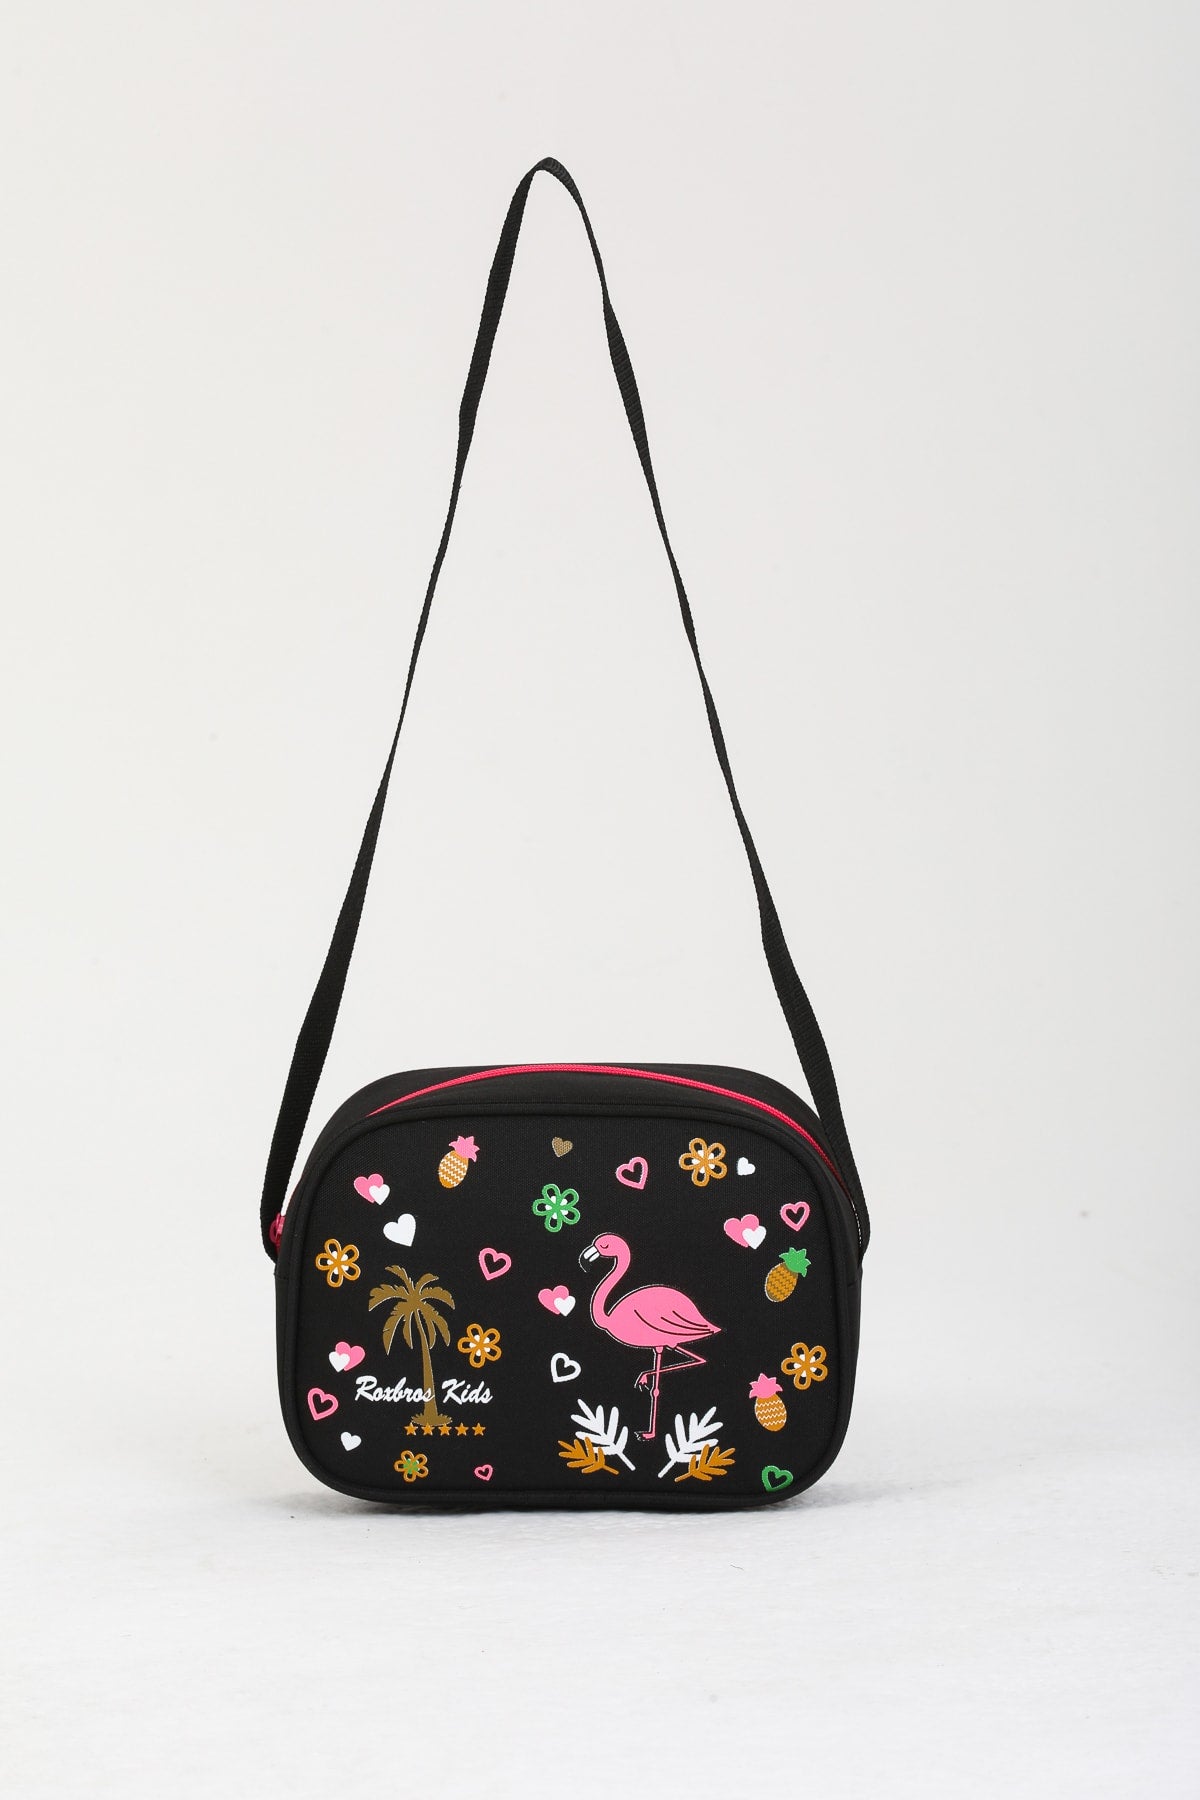 Black Flamingo Primary School Bag + Lunch Box Girls